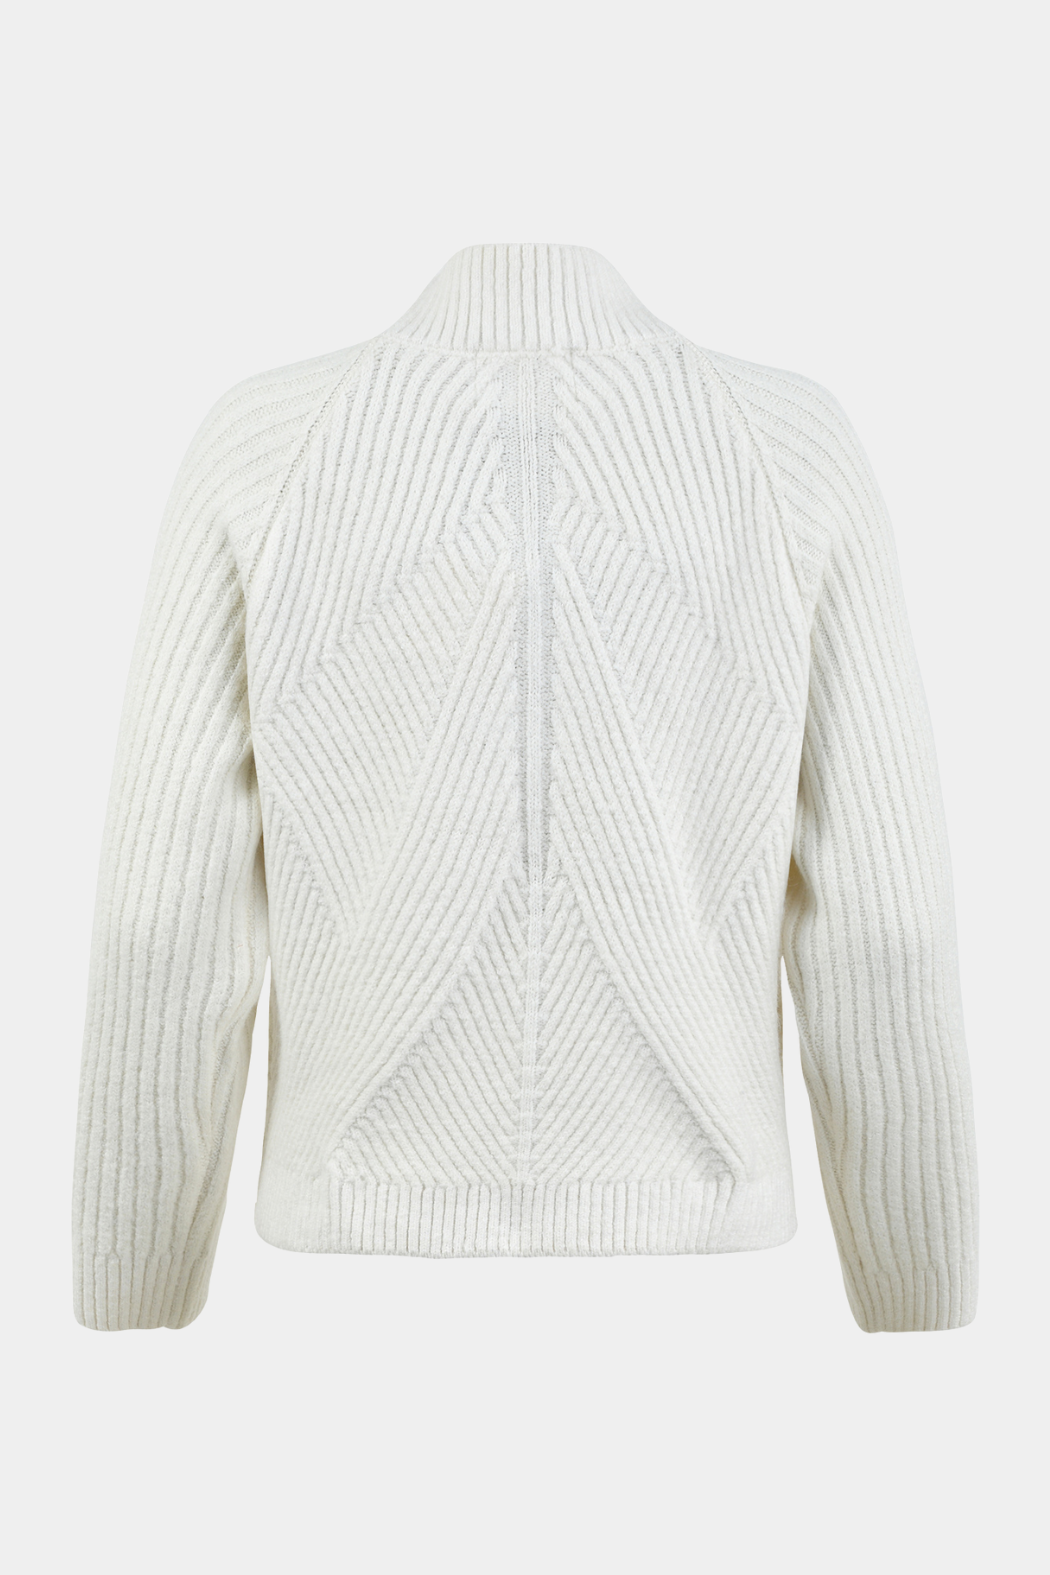 SNOS416, sweater